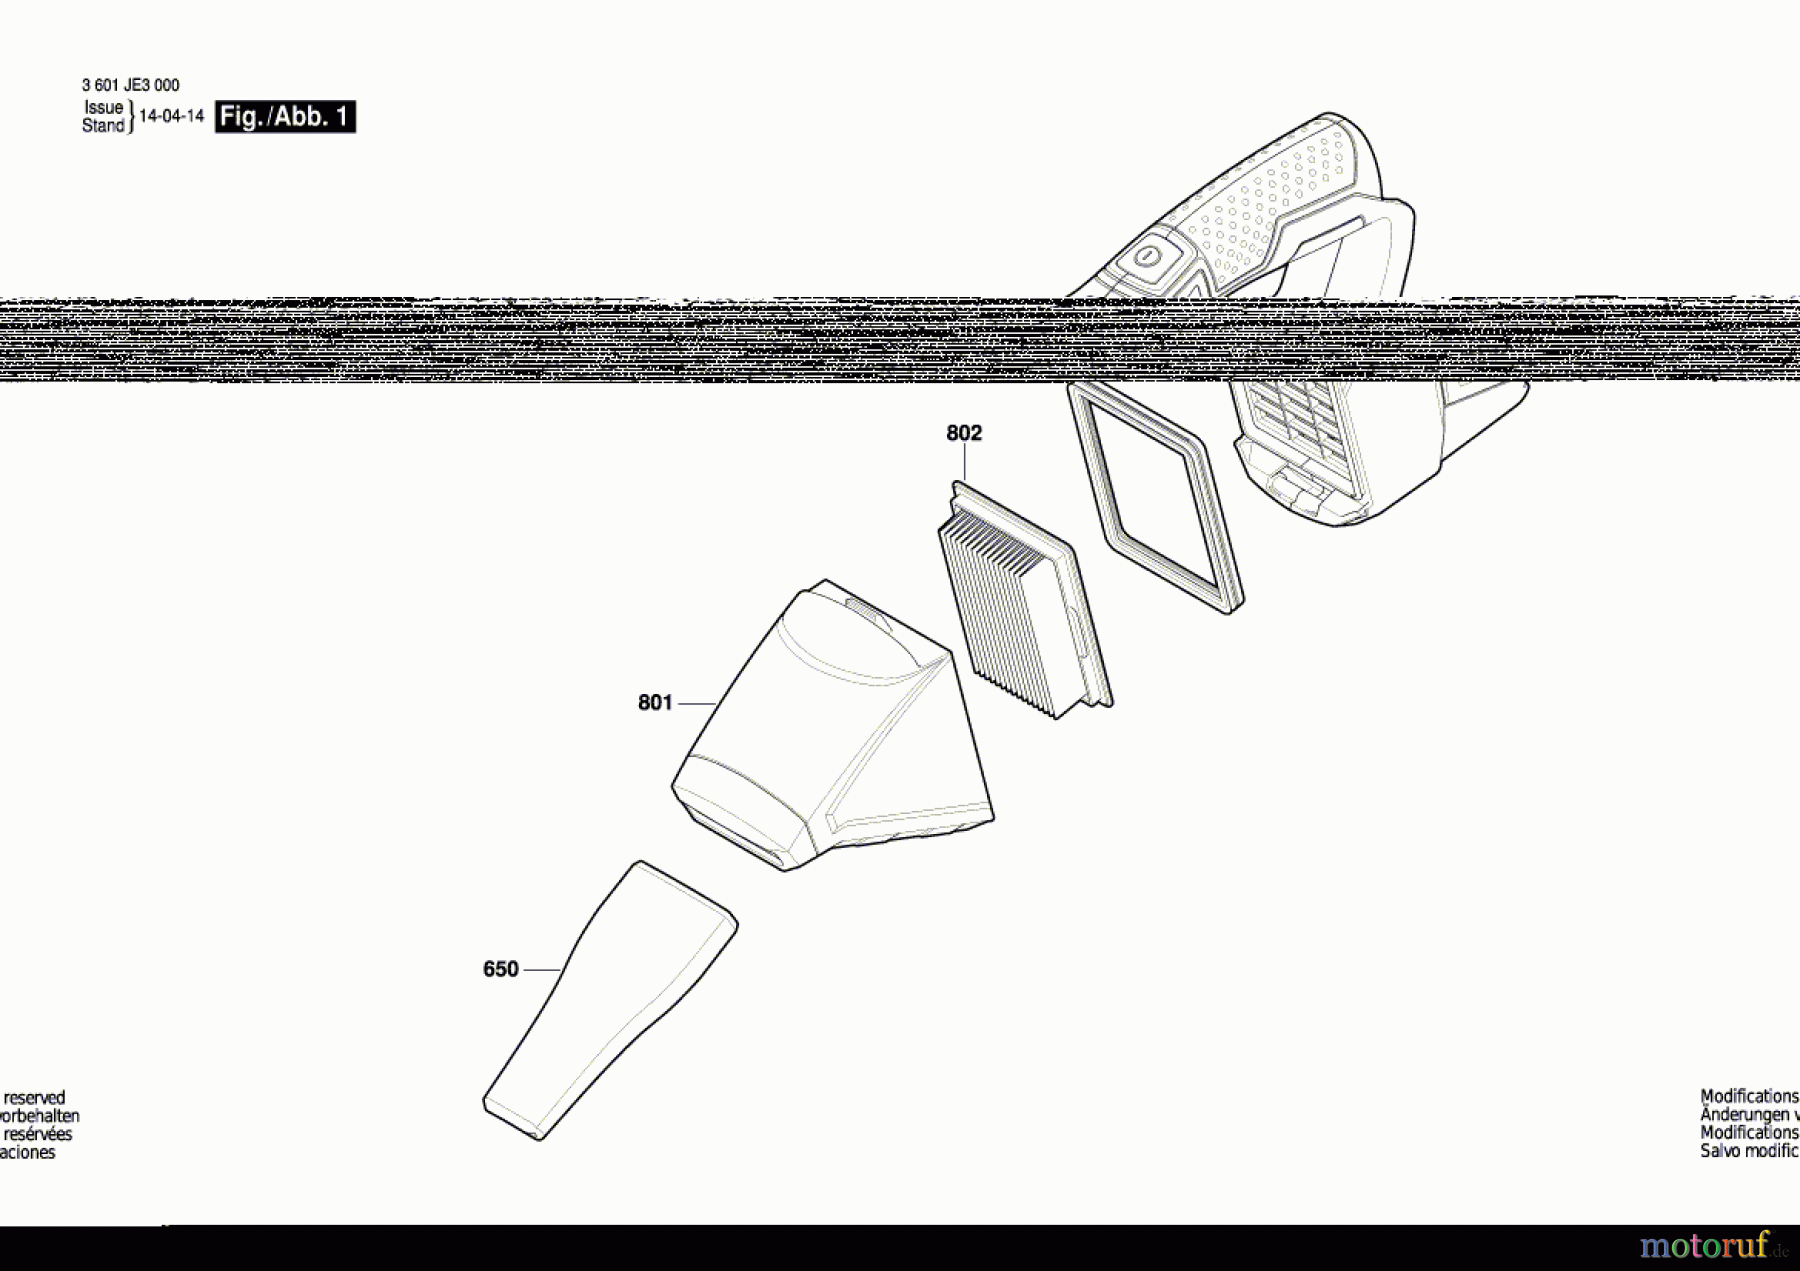  Bosch Akku Werkzeug Akku-Sauger GAS 12 V Seite 1